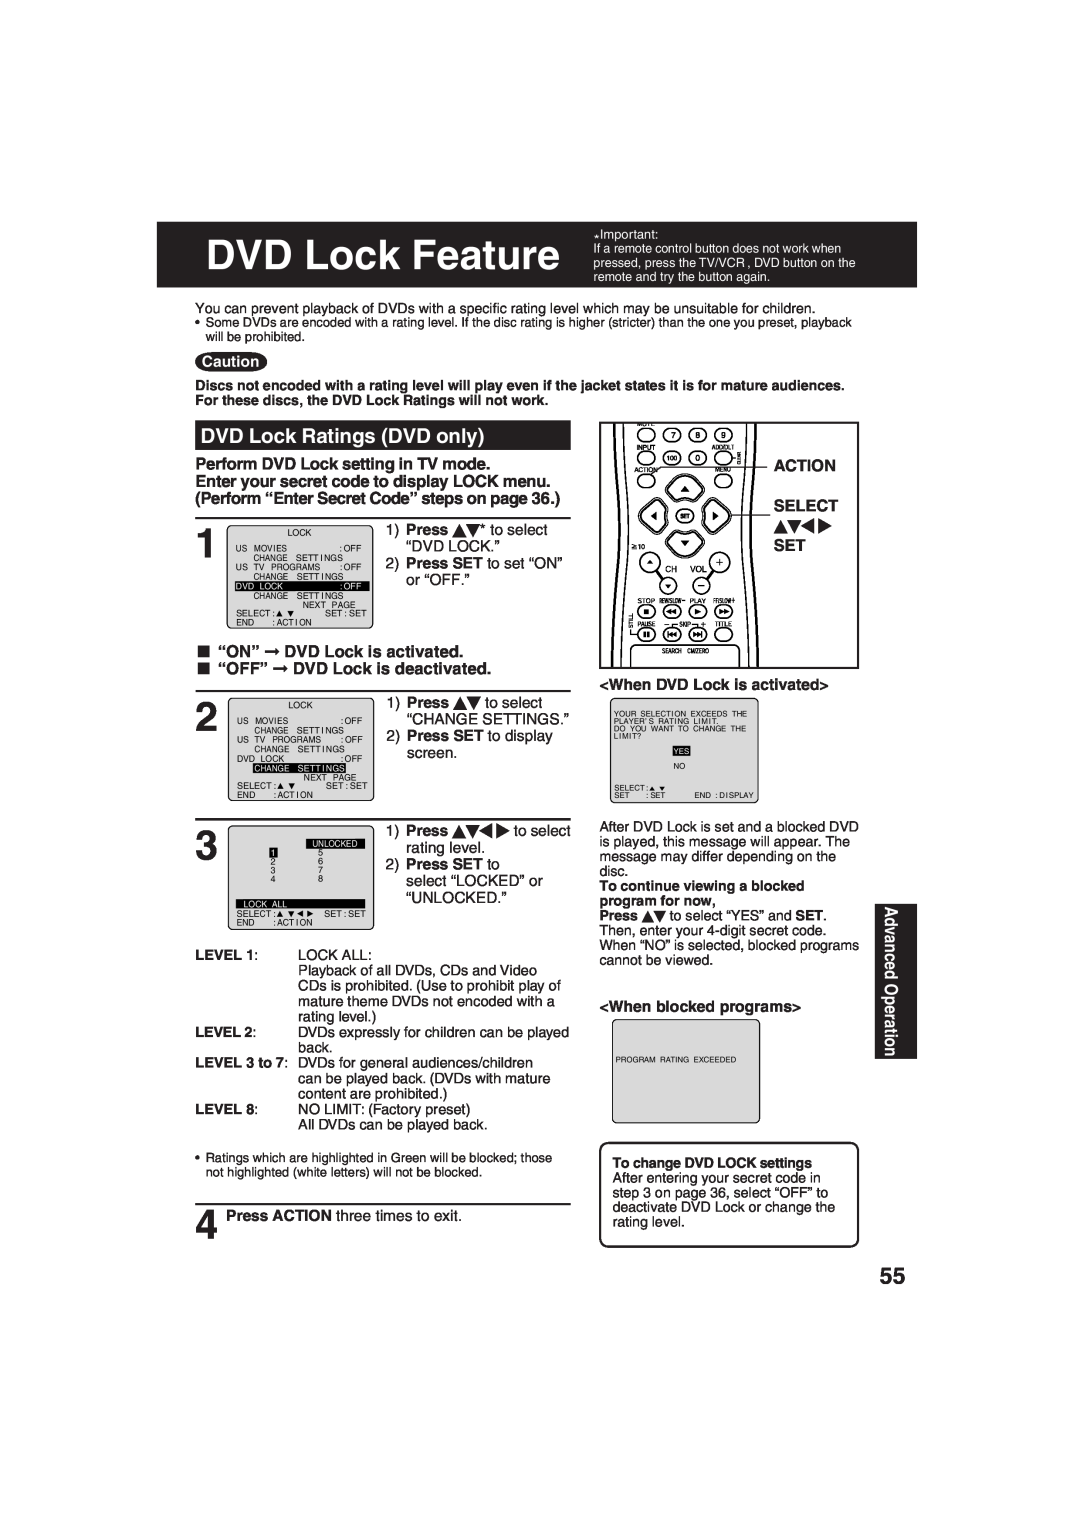 Panasonic PV-DF273 DVD Lock Ratings DVD only, Perform DVD Lock setting in TV mode, When blocked programs, Press, Level 